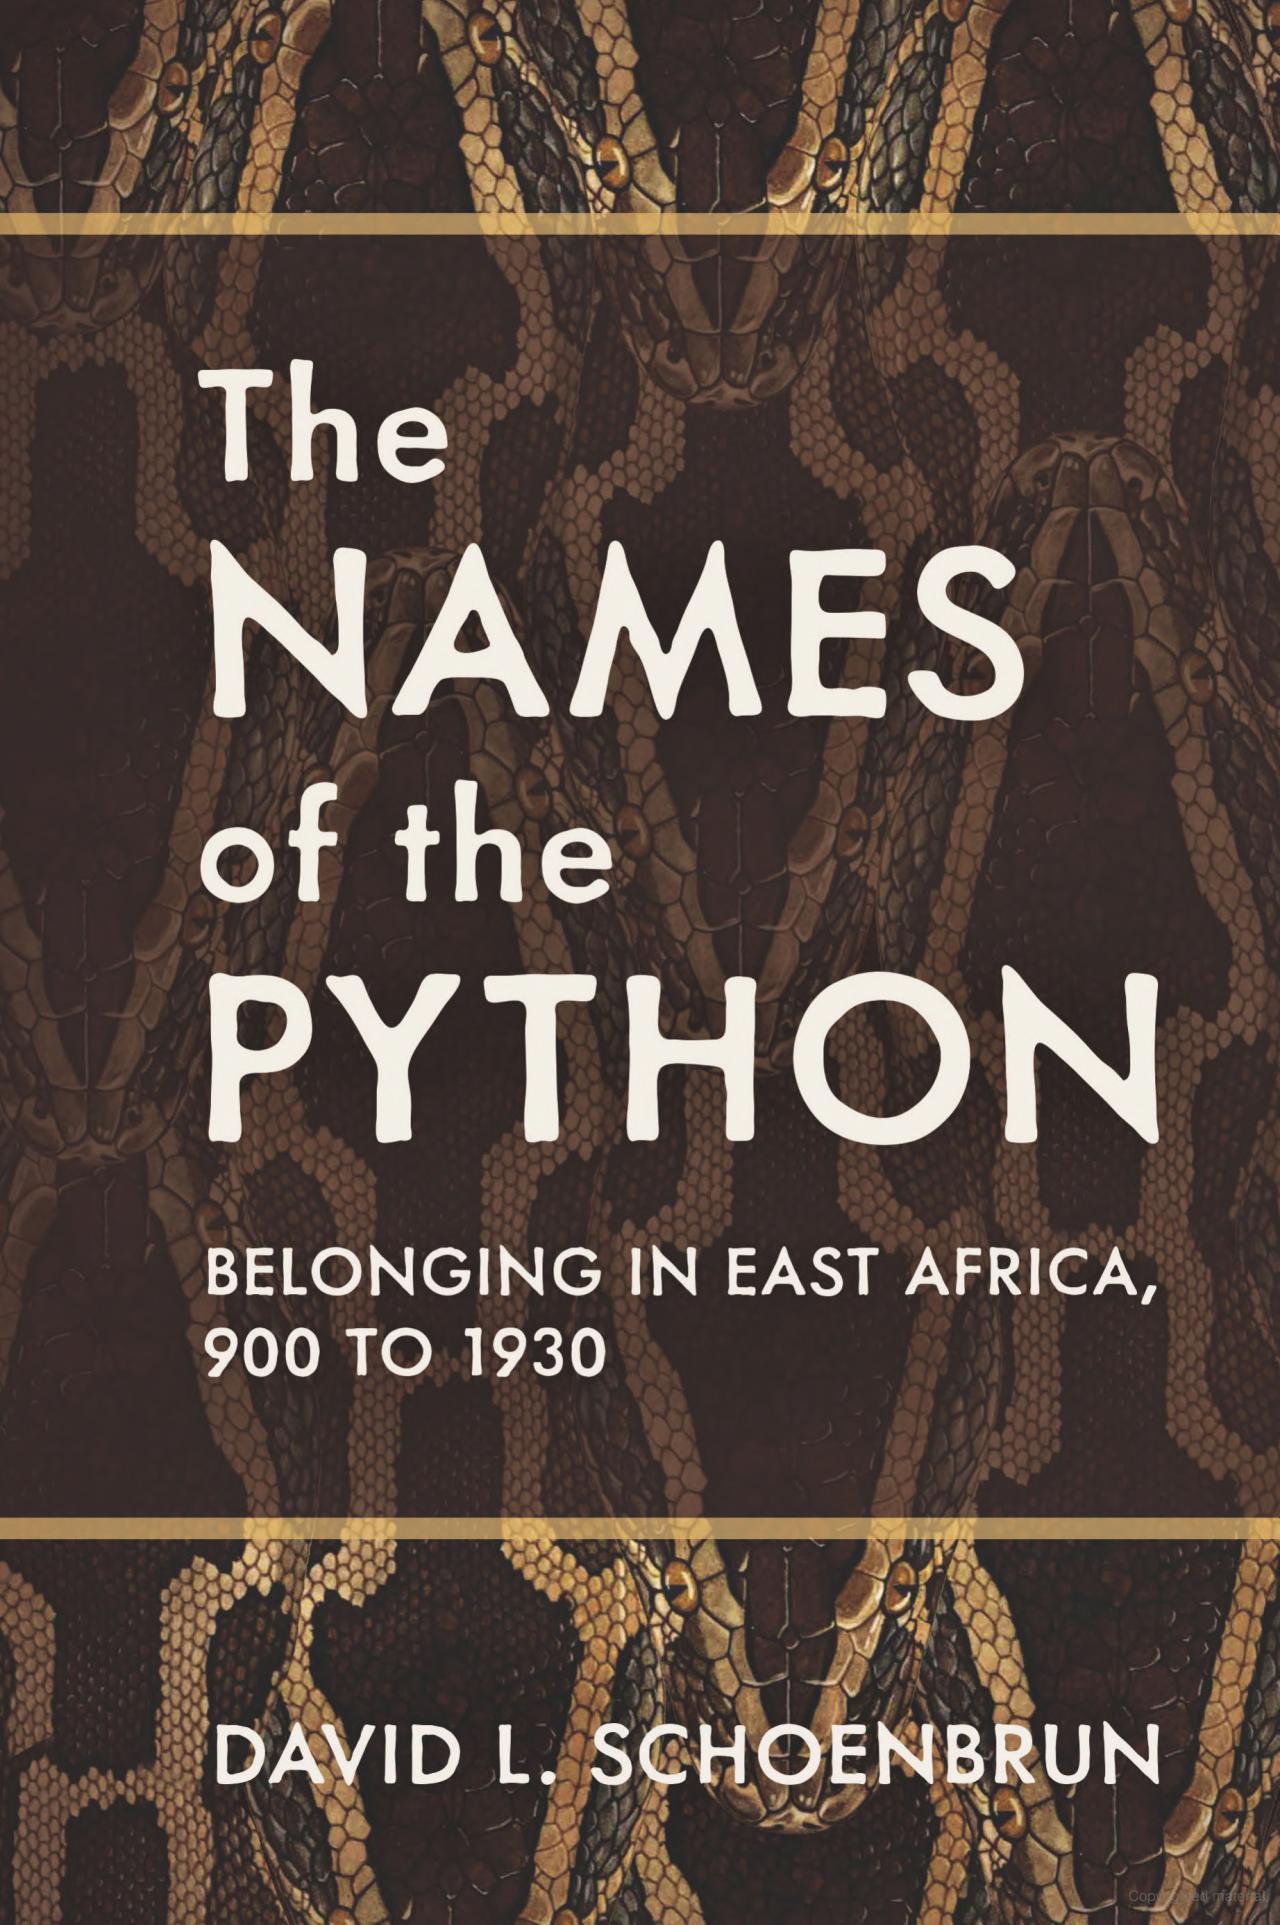 names-pf-the-python-schoenbrun-book-cover.jpg